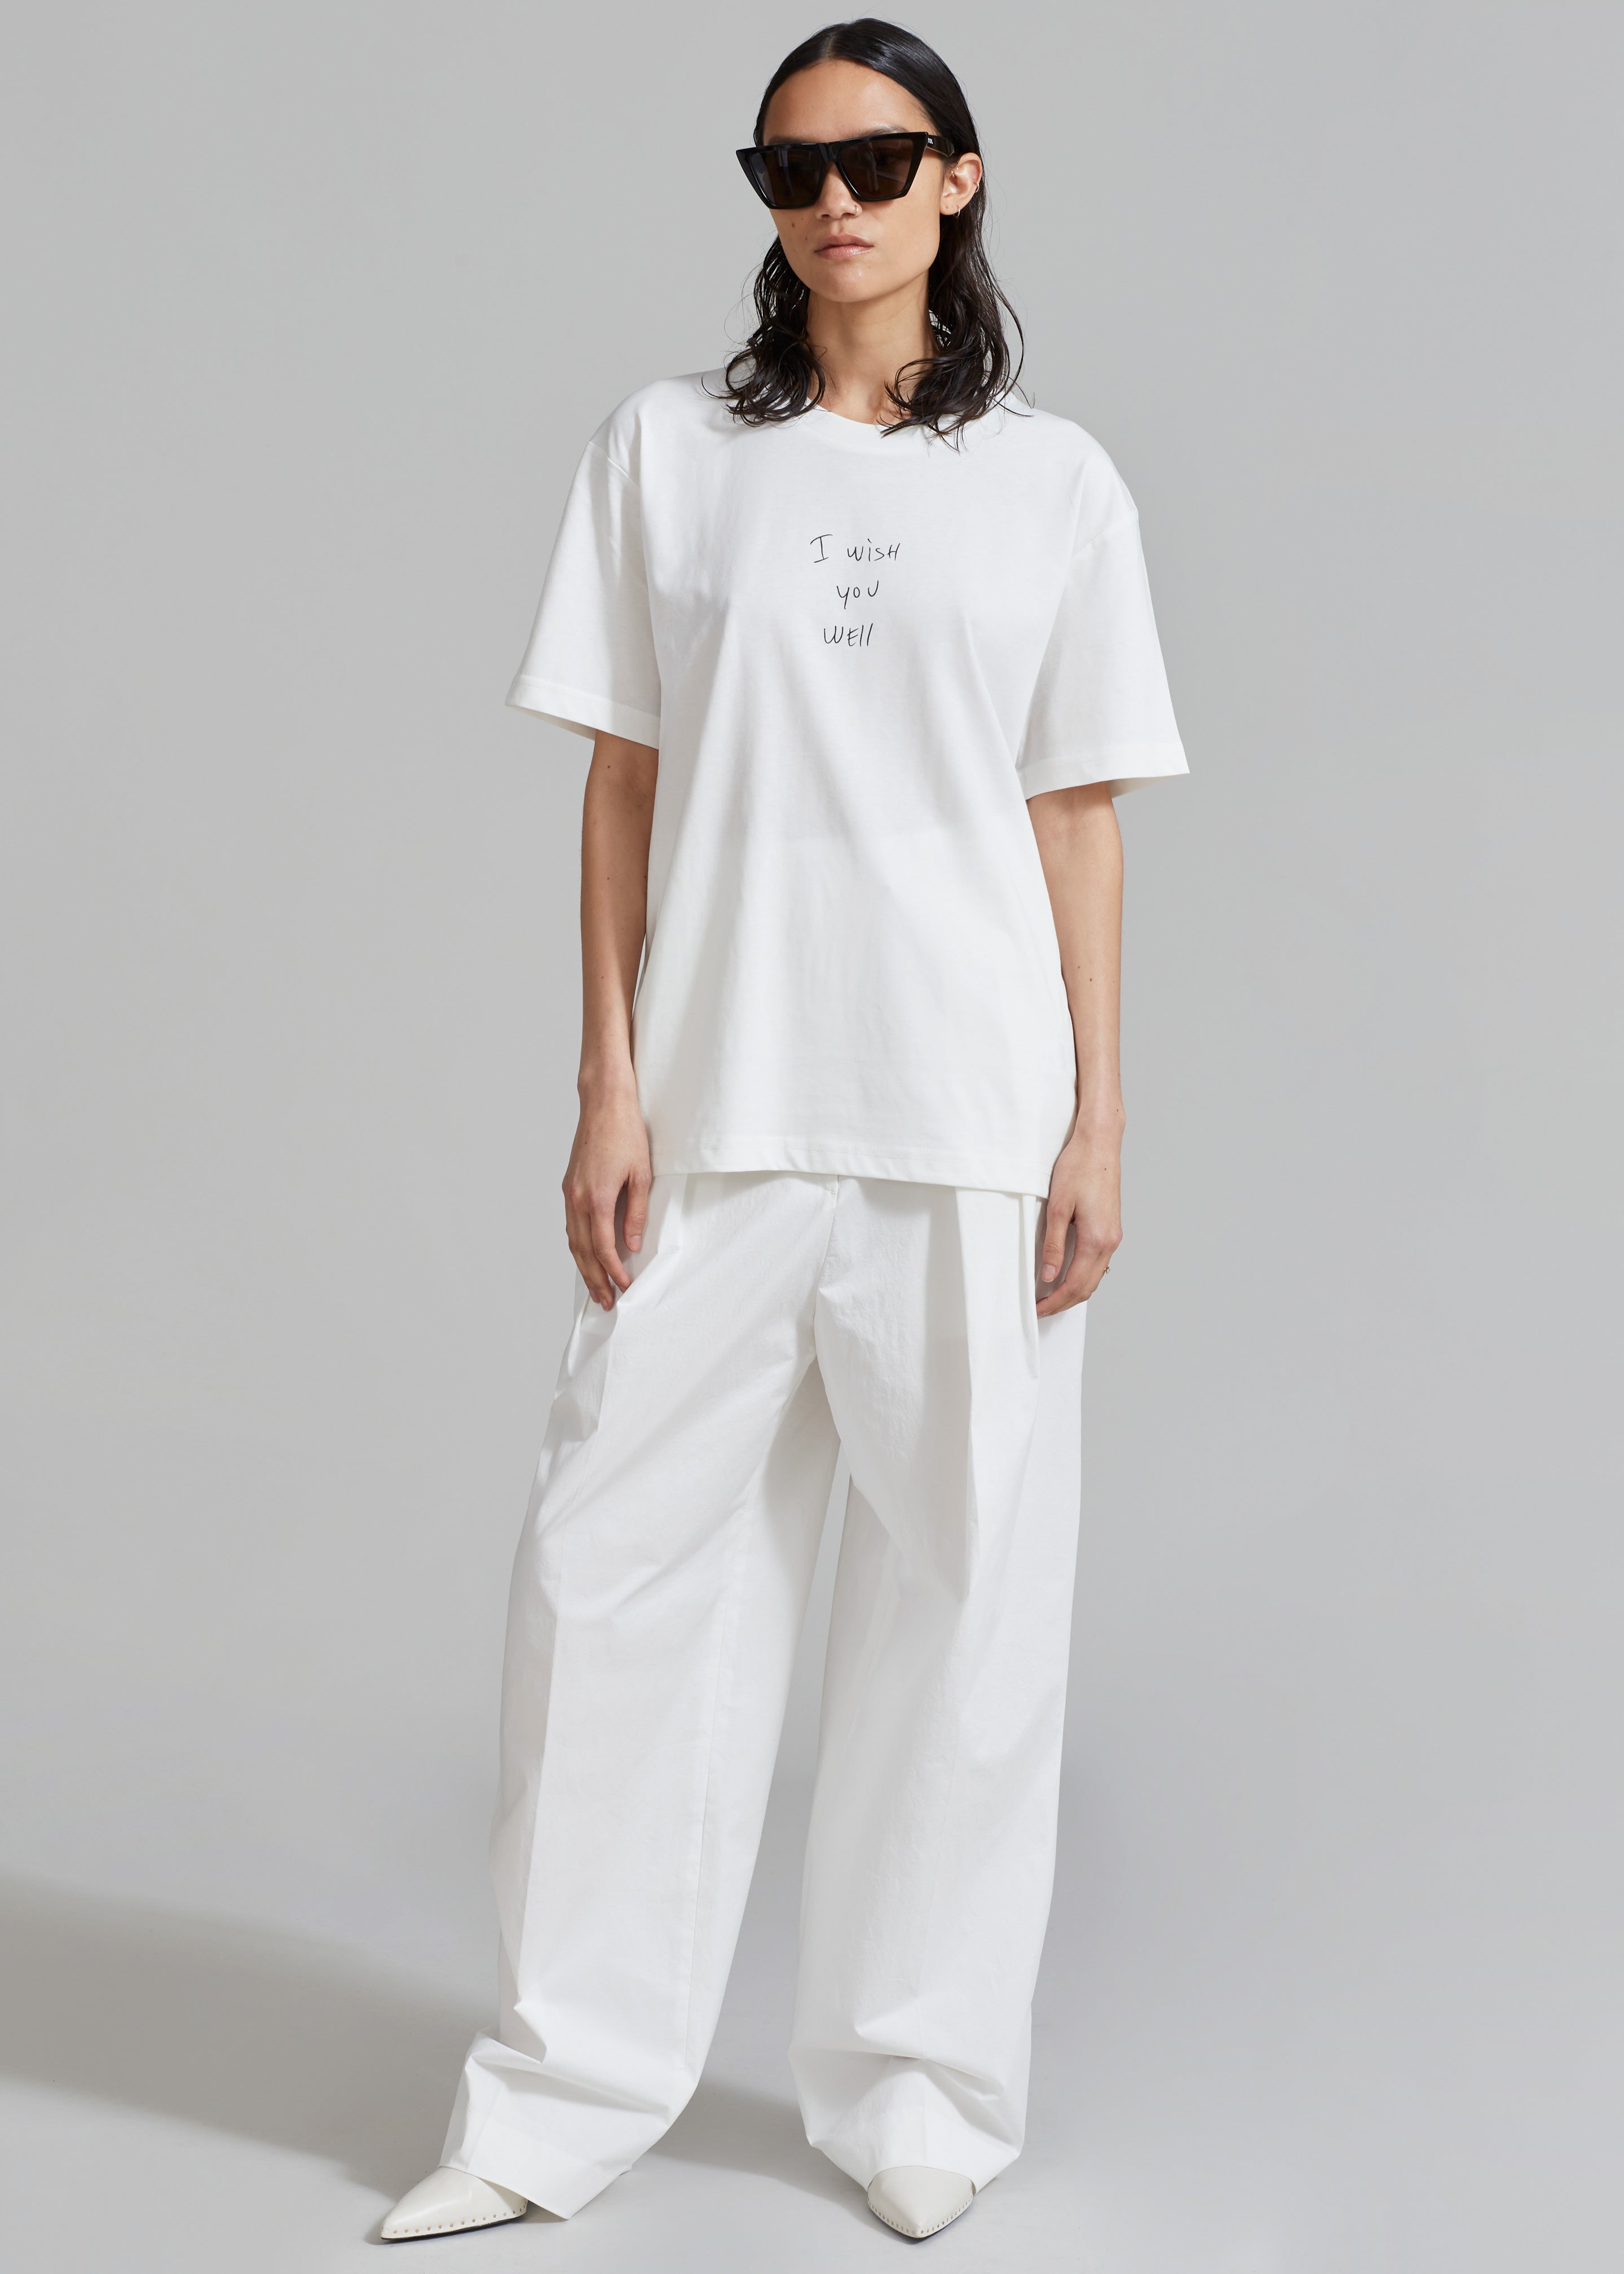 The Frankie Shop x Thomas Lélu Slope T-Shirt - Off White/Black - 2